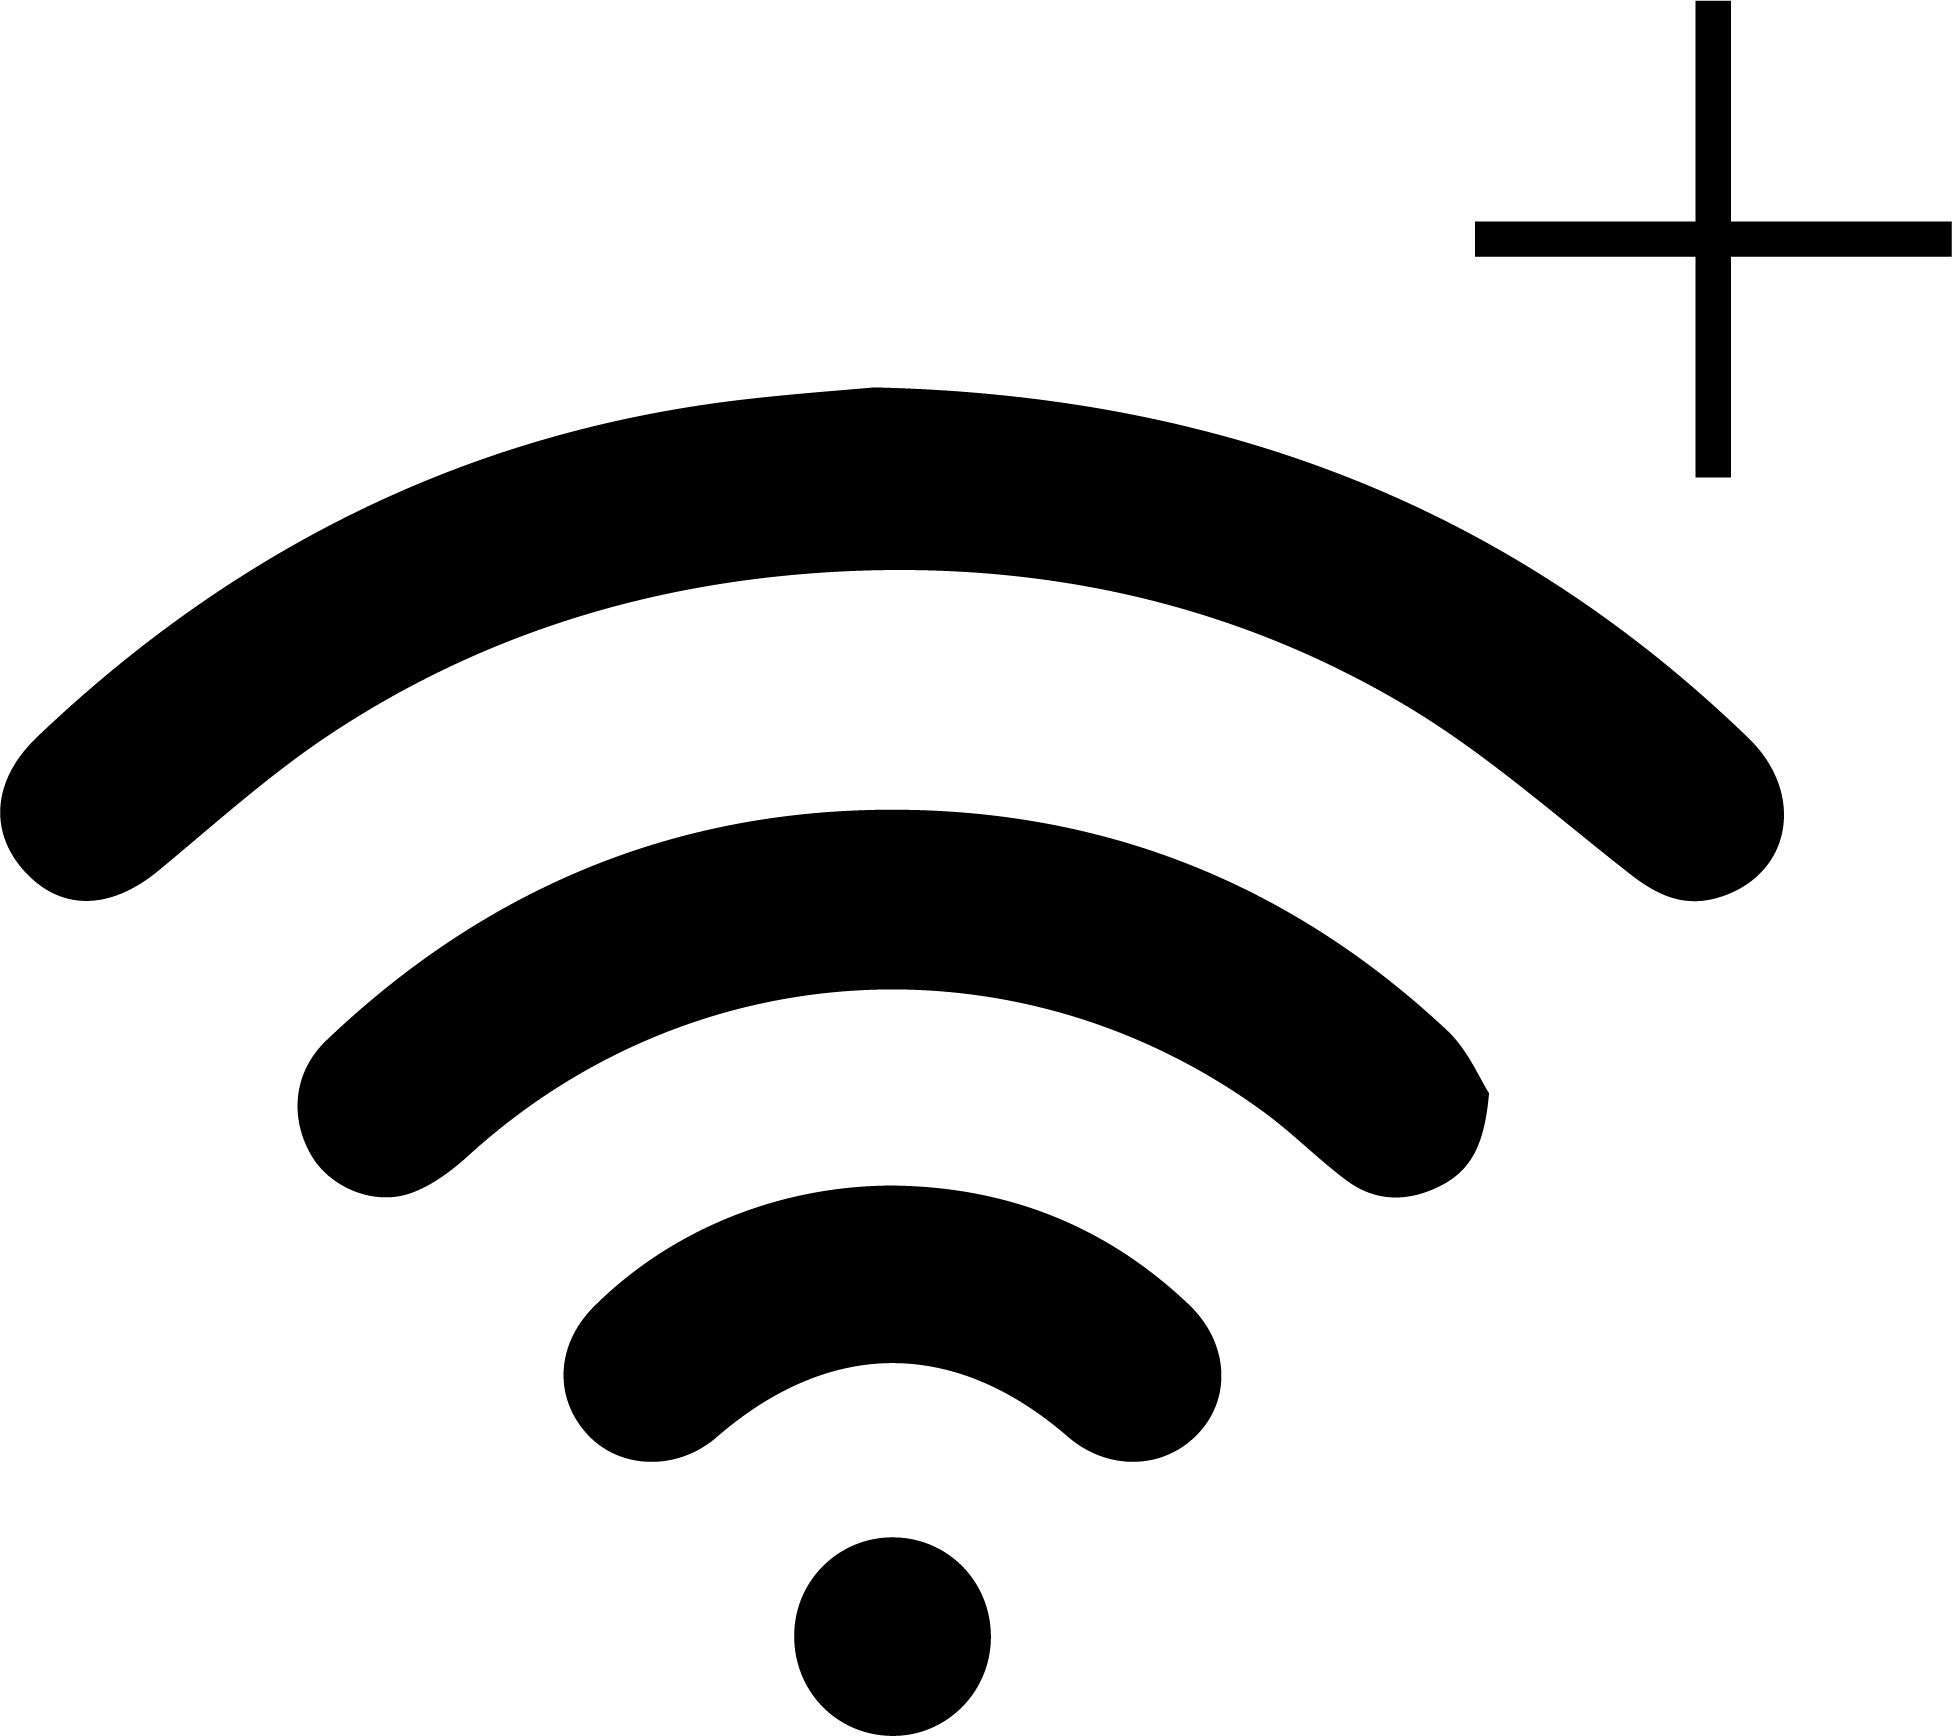 rfid logo